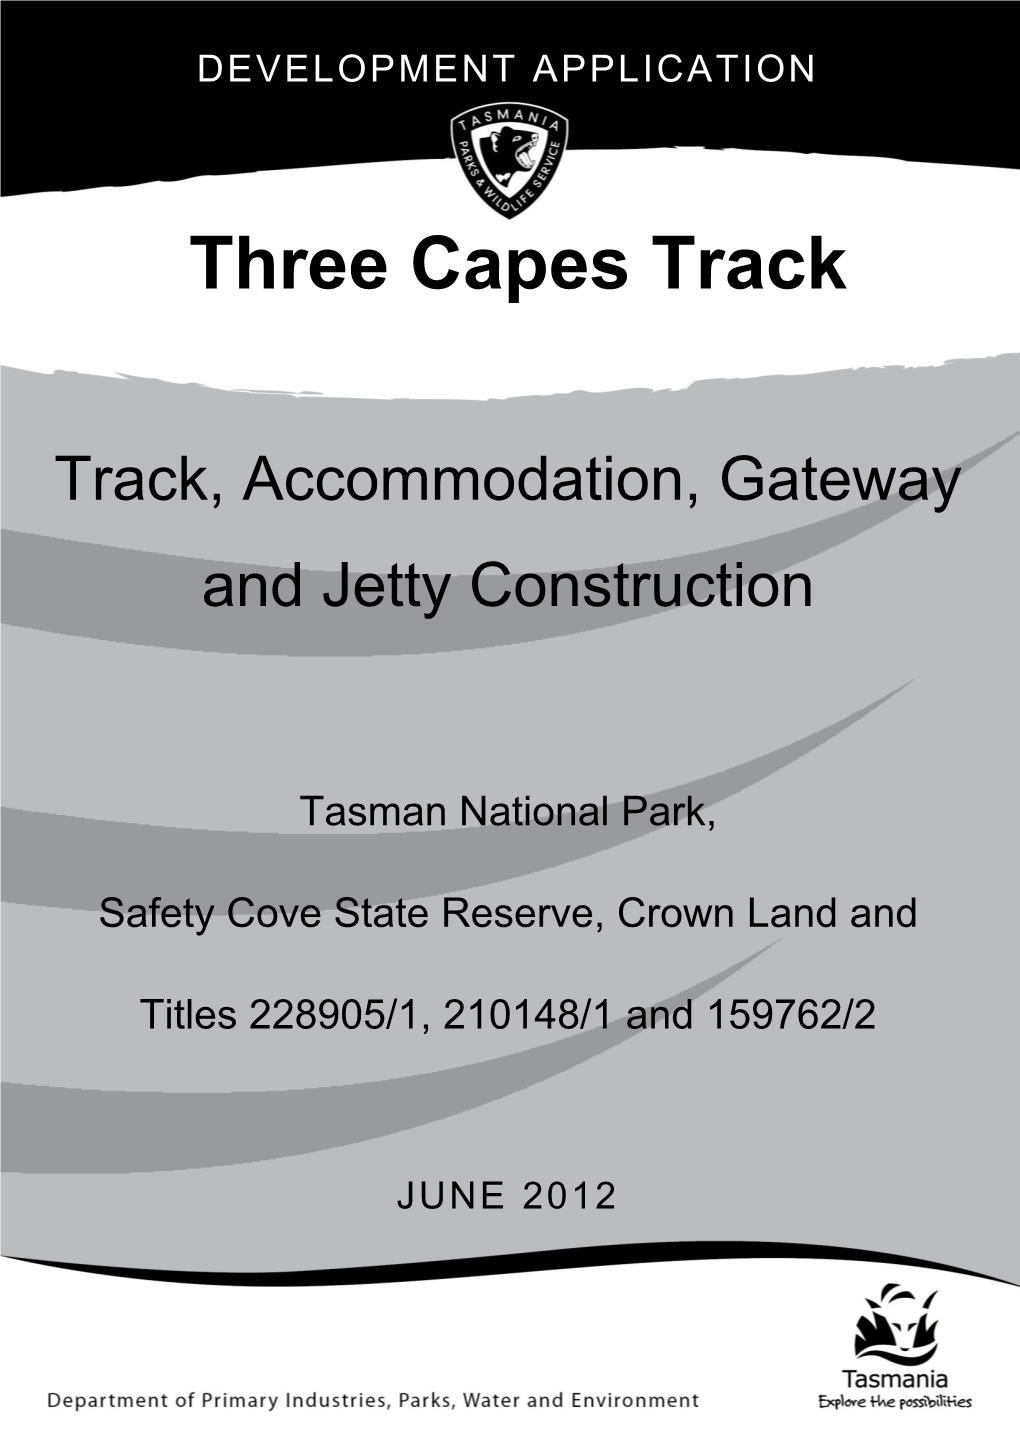 Three Capes Track Development Application 2012